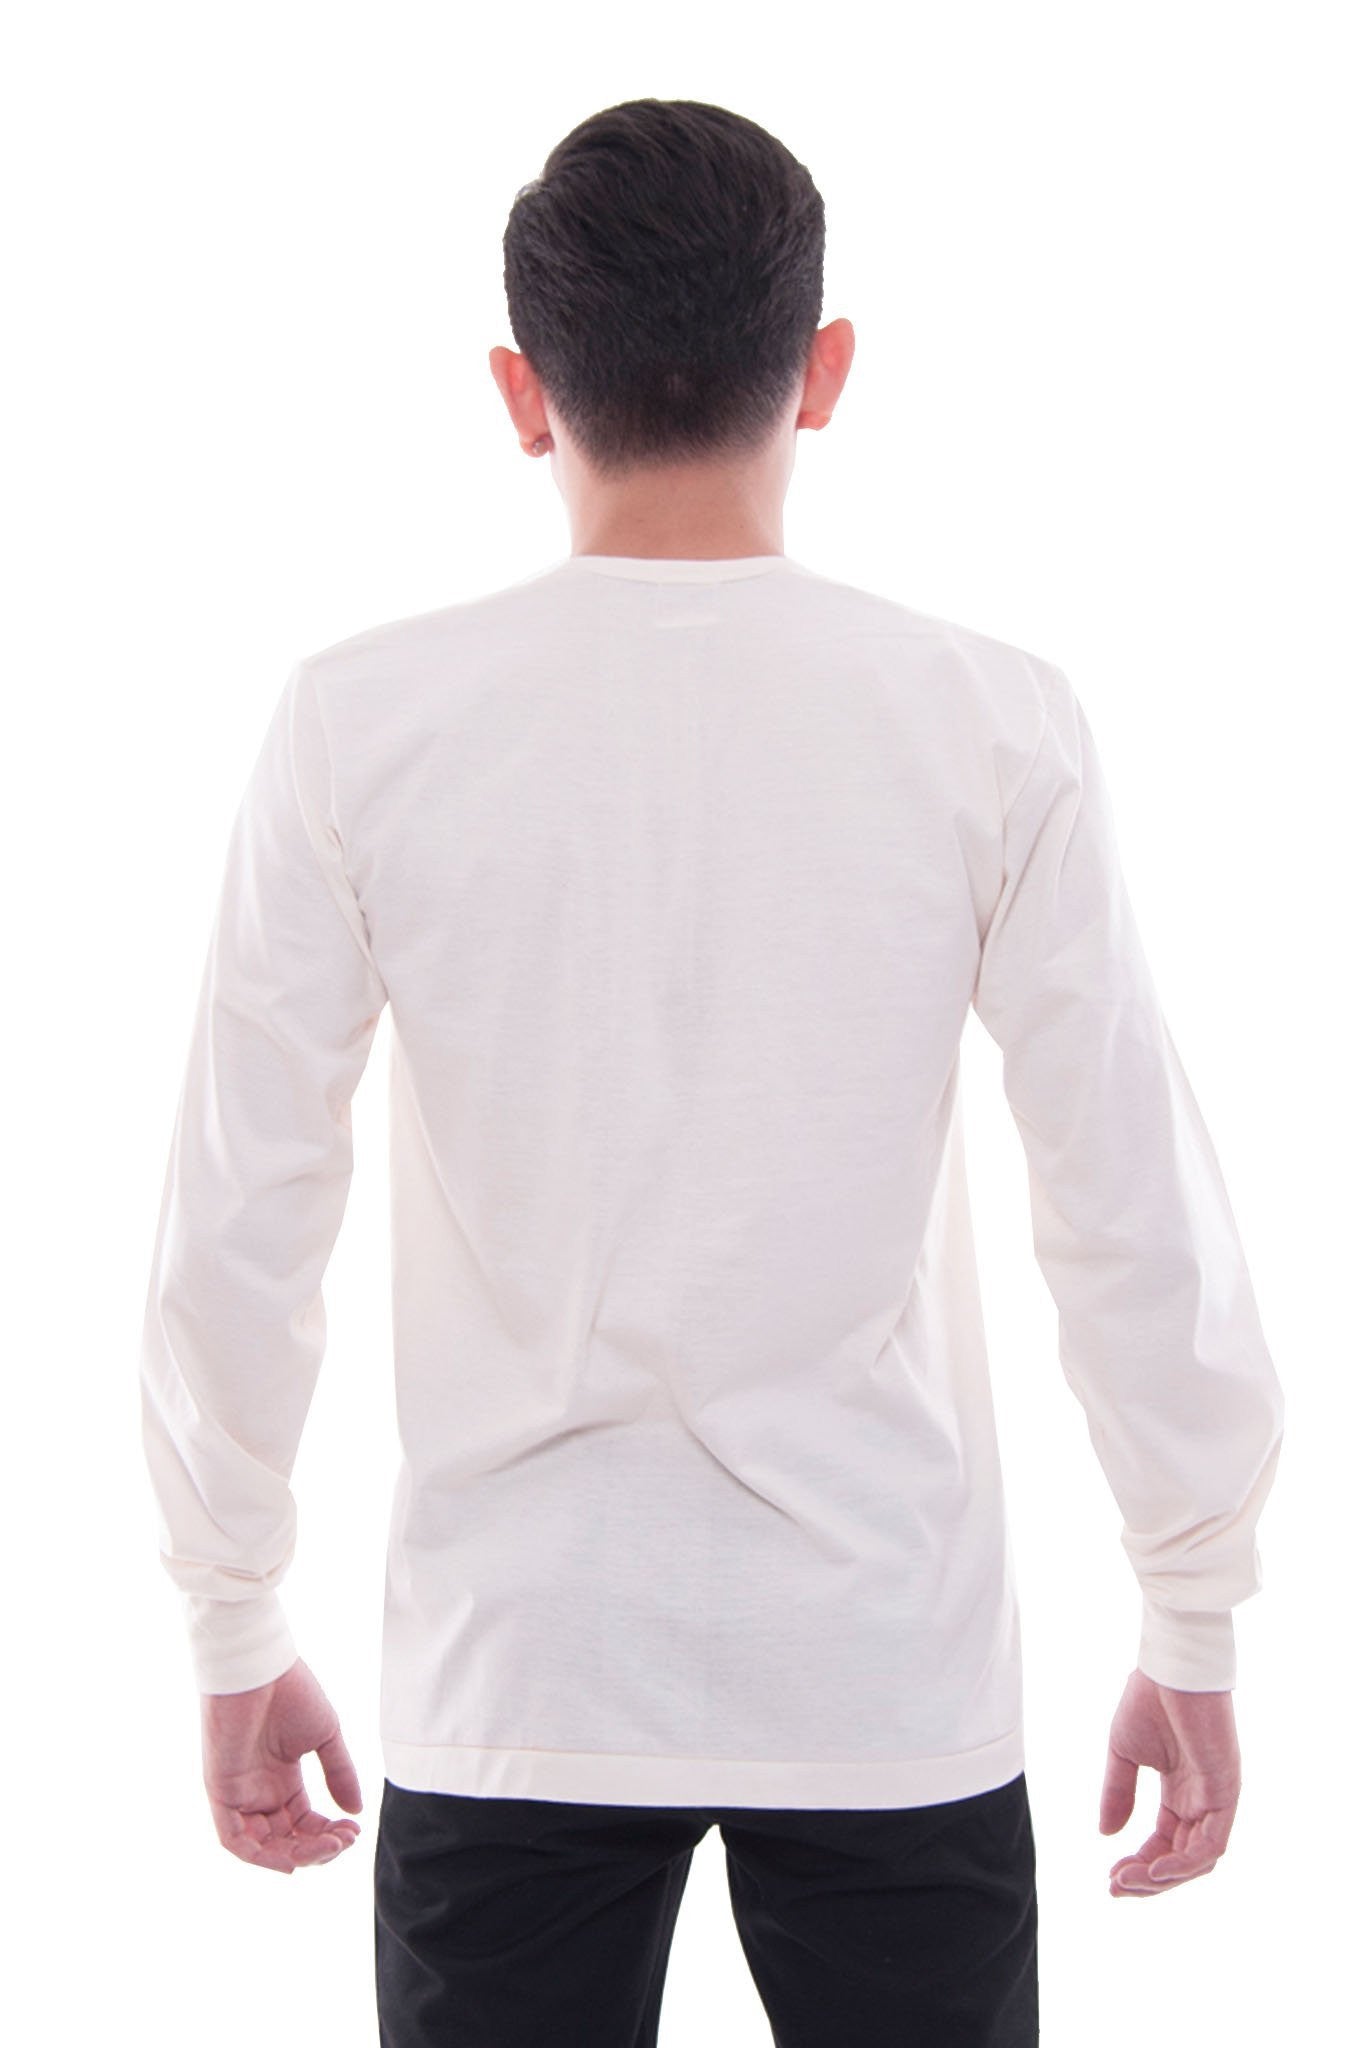 BARONG WAREHOUSE - MUL2 - Camisa de Chino - Long-Sleeve - Beige